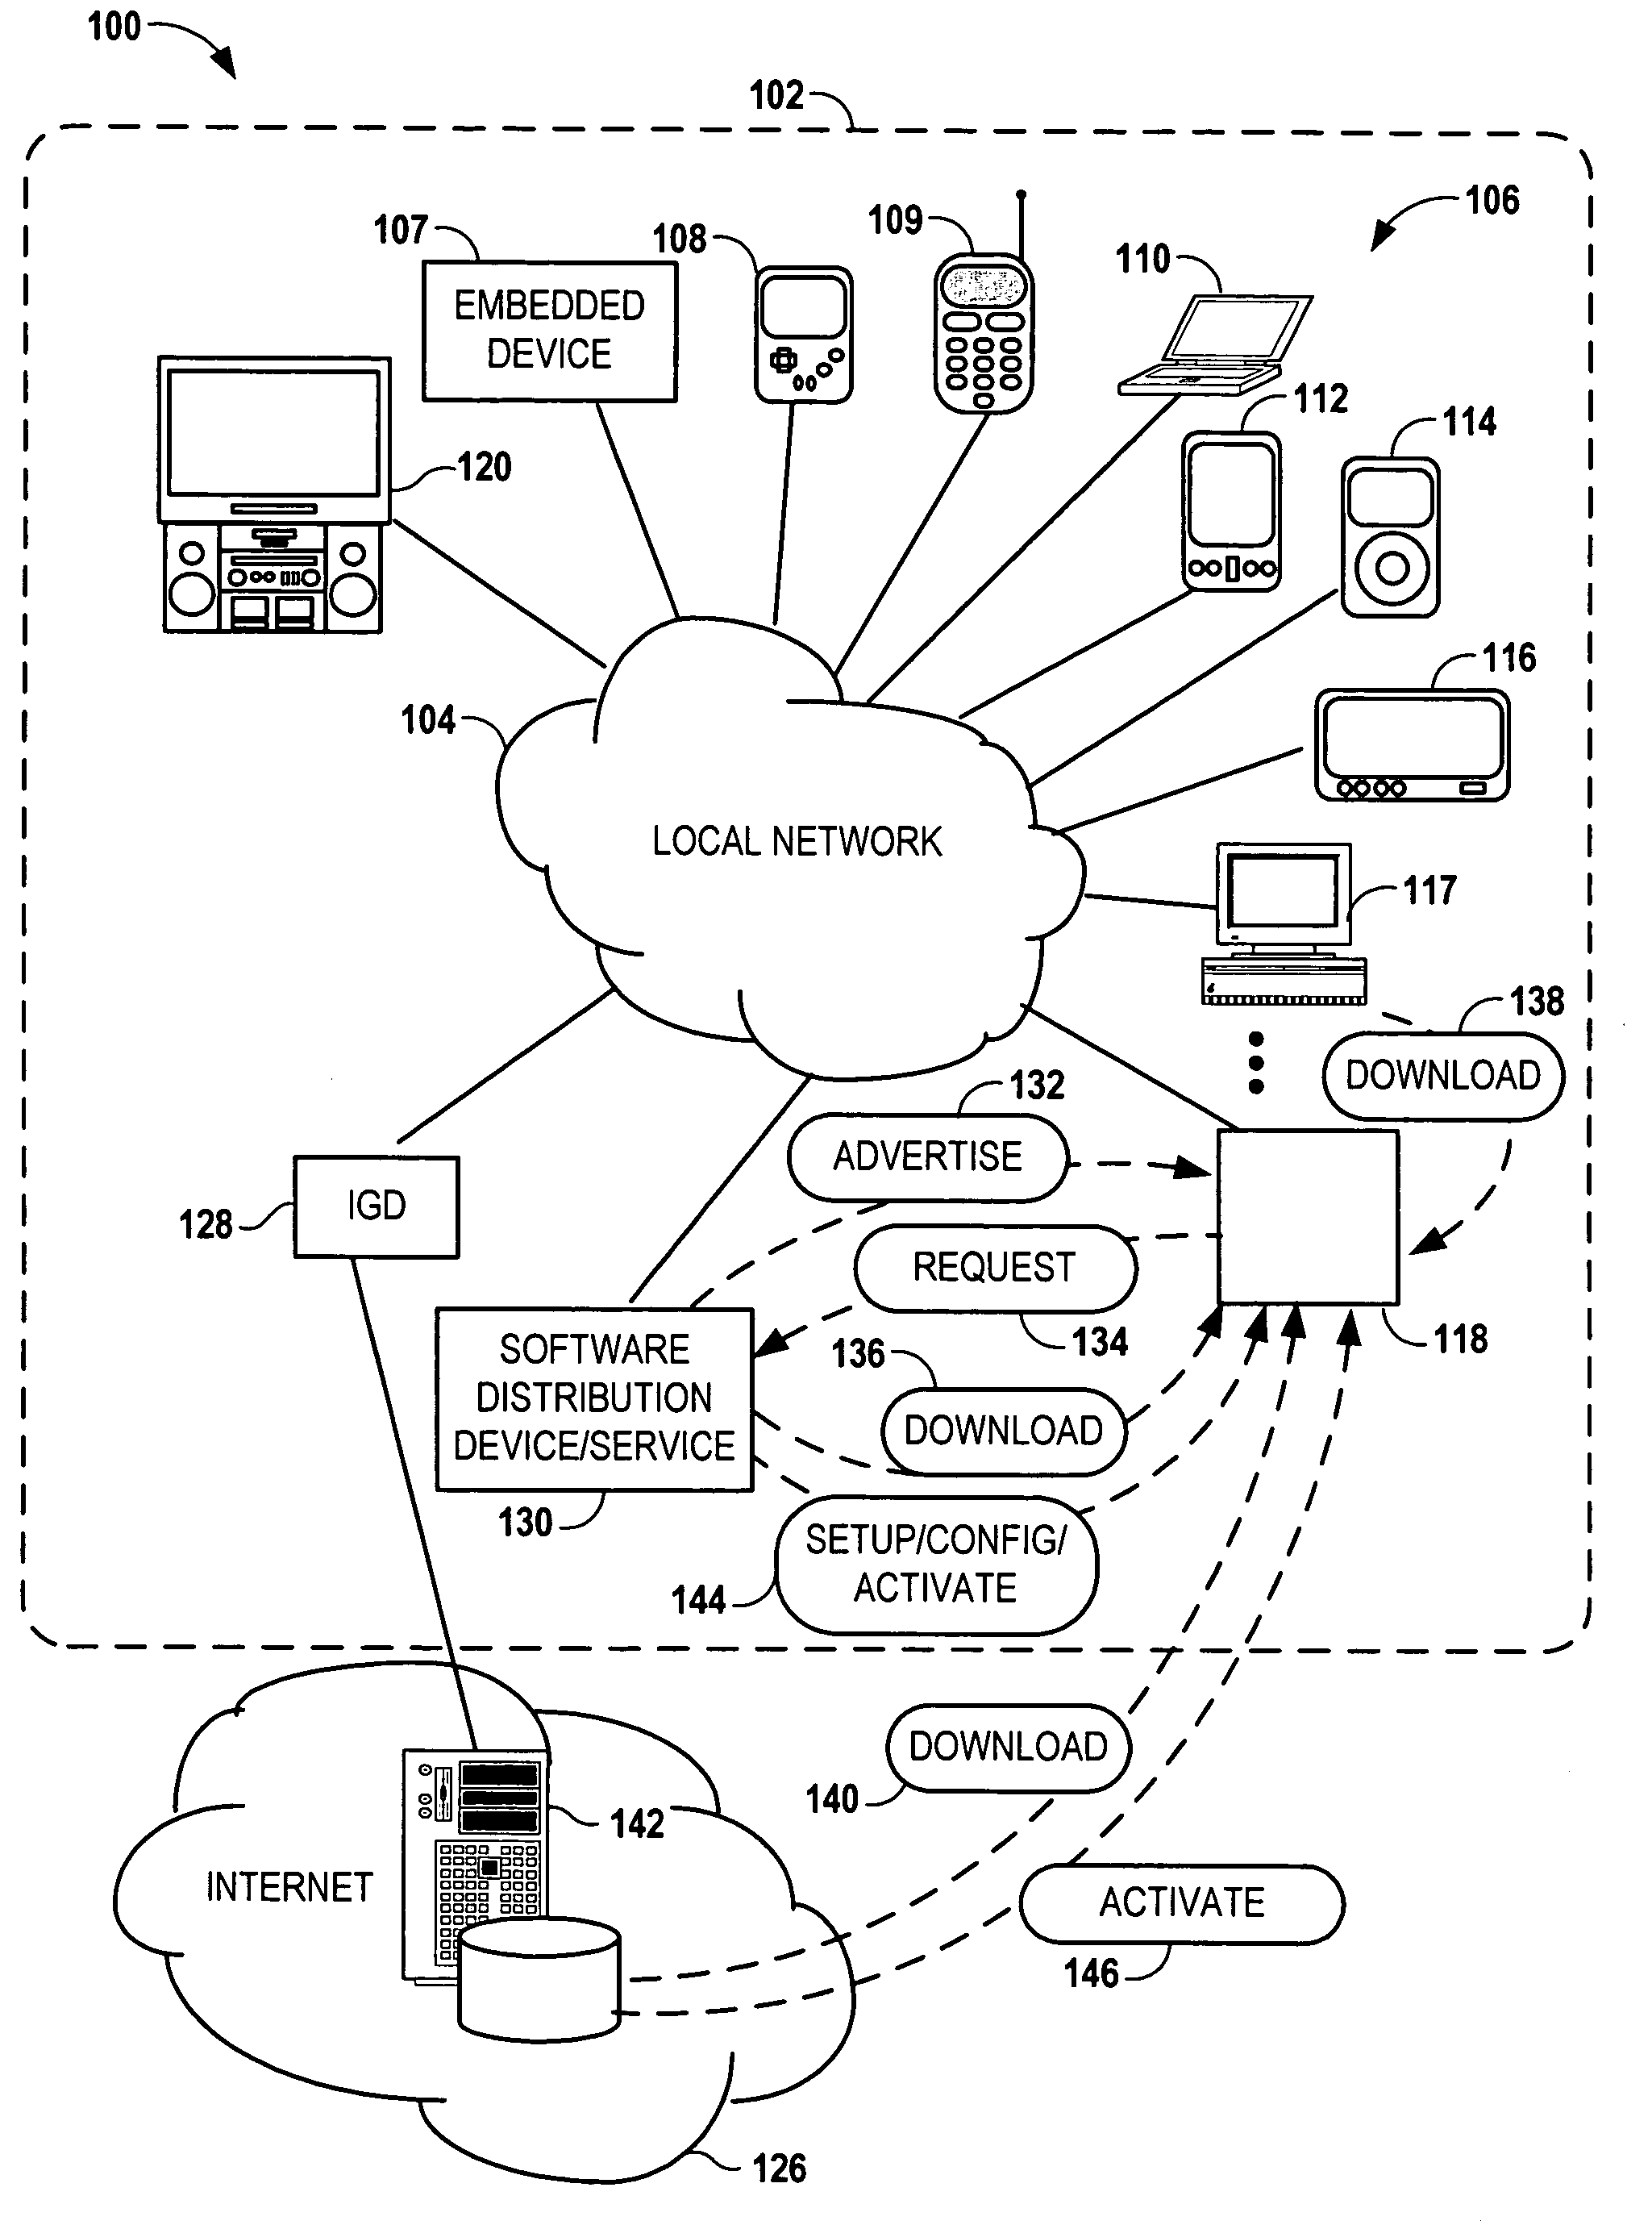 Software distribution via peer-to-peer networks